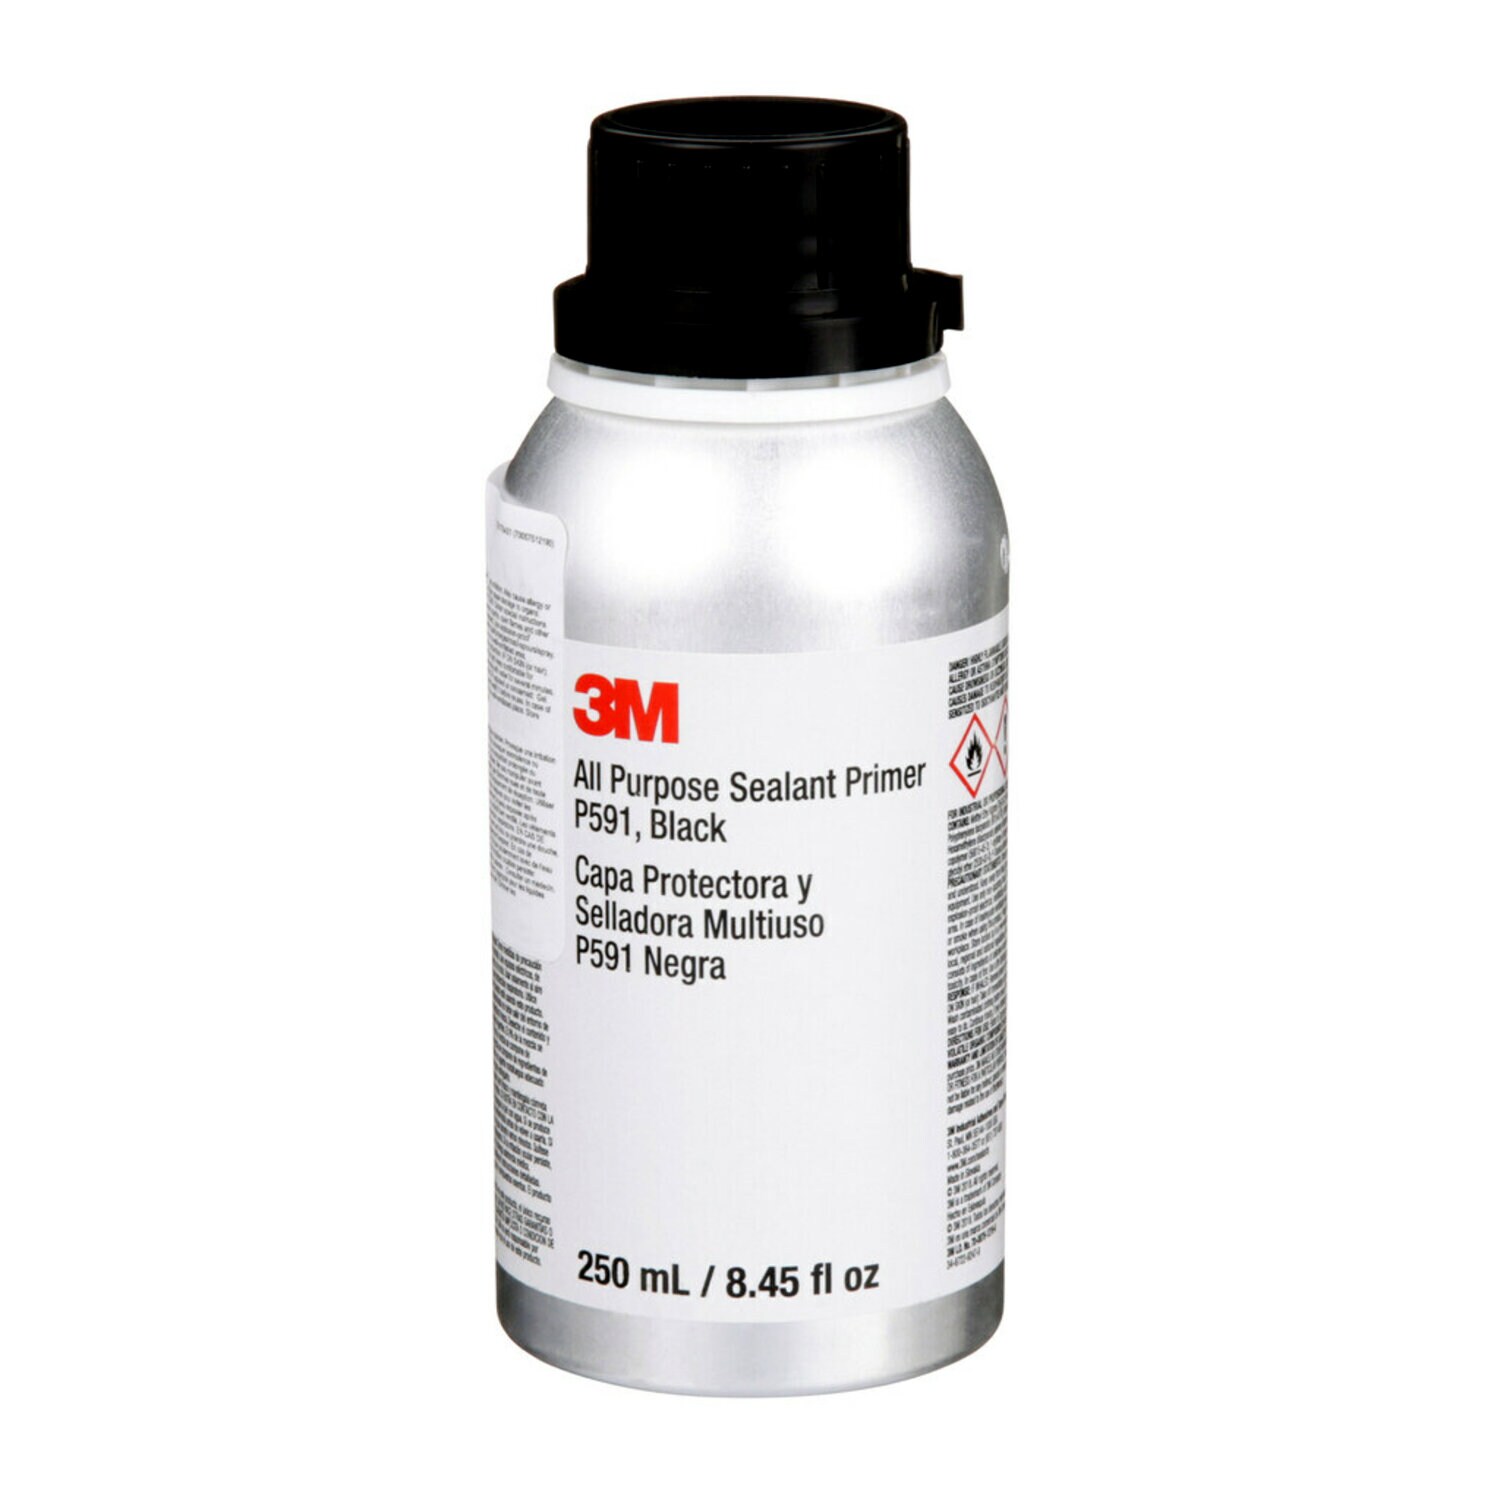 7100175431 - 3M All Purpose Sealant Primer P591, Black, 250 mL Bottle, 12/Case